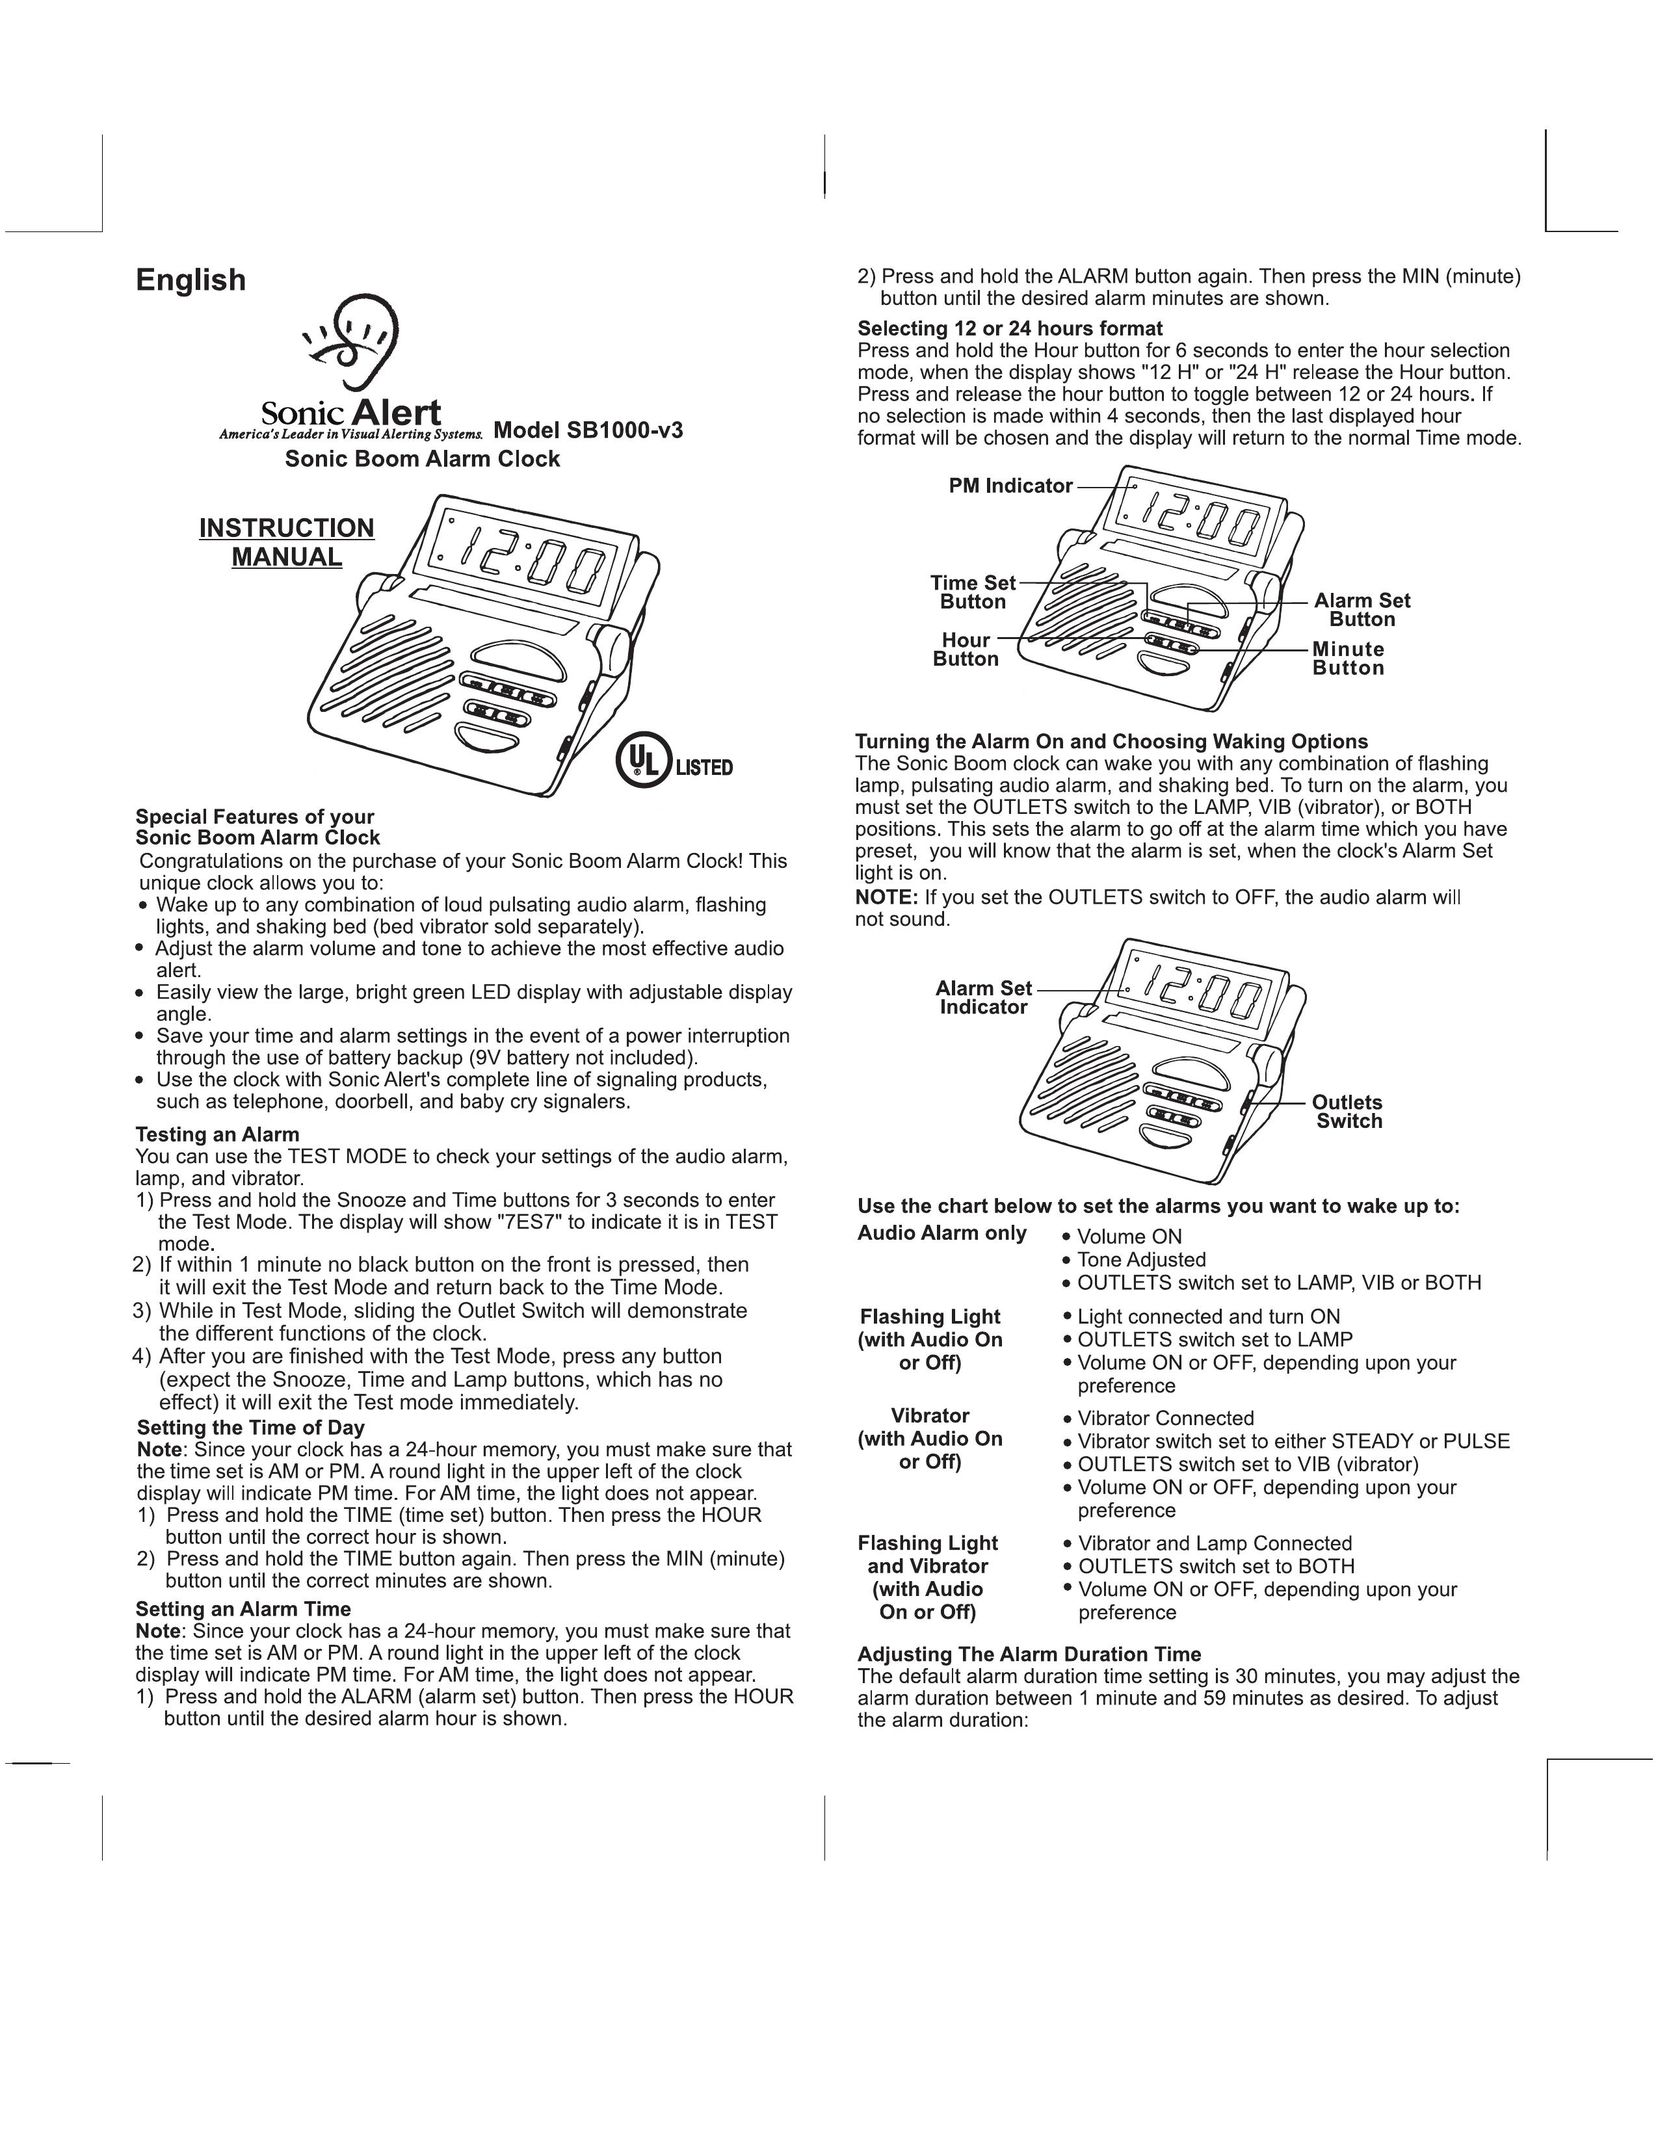 Sonic Alert SB1000-V3 Clock User Manual